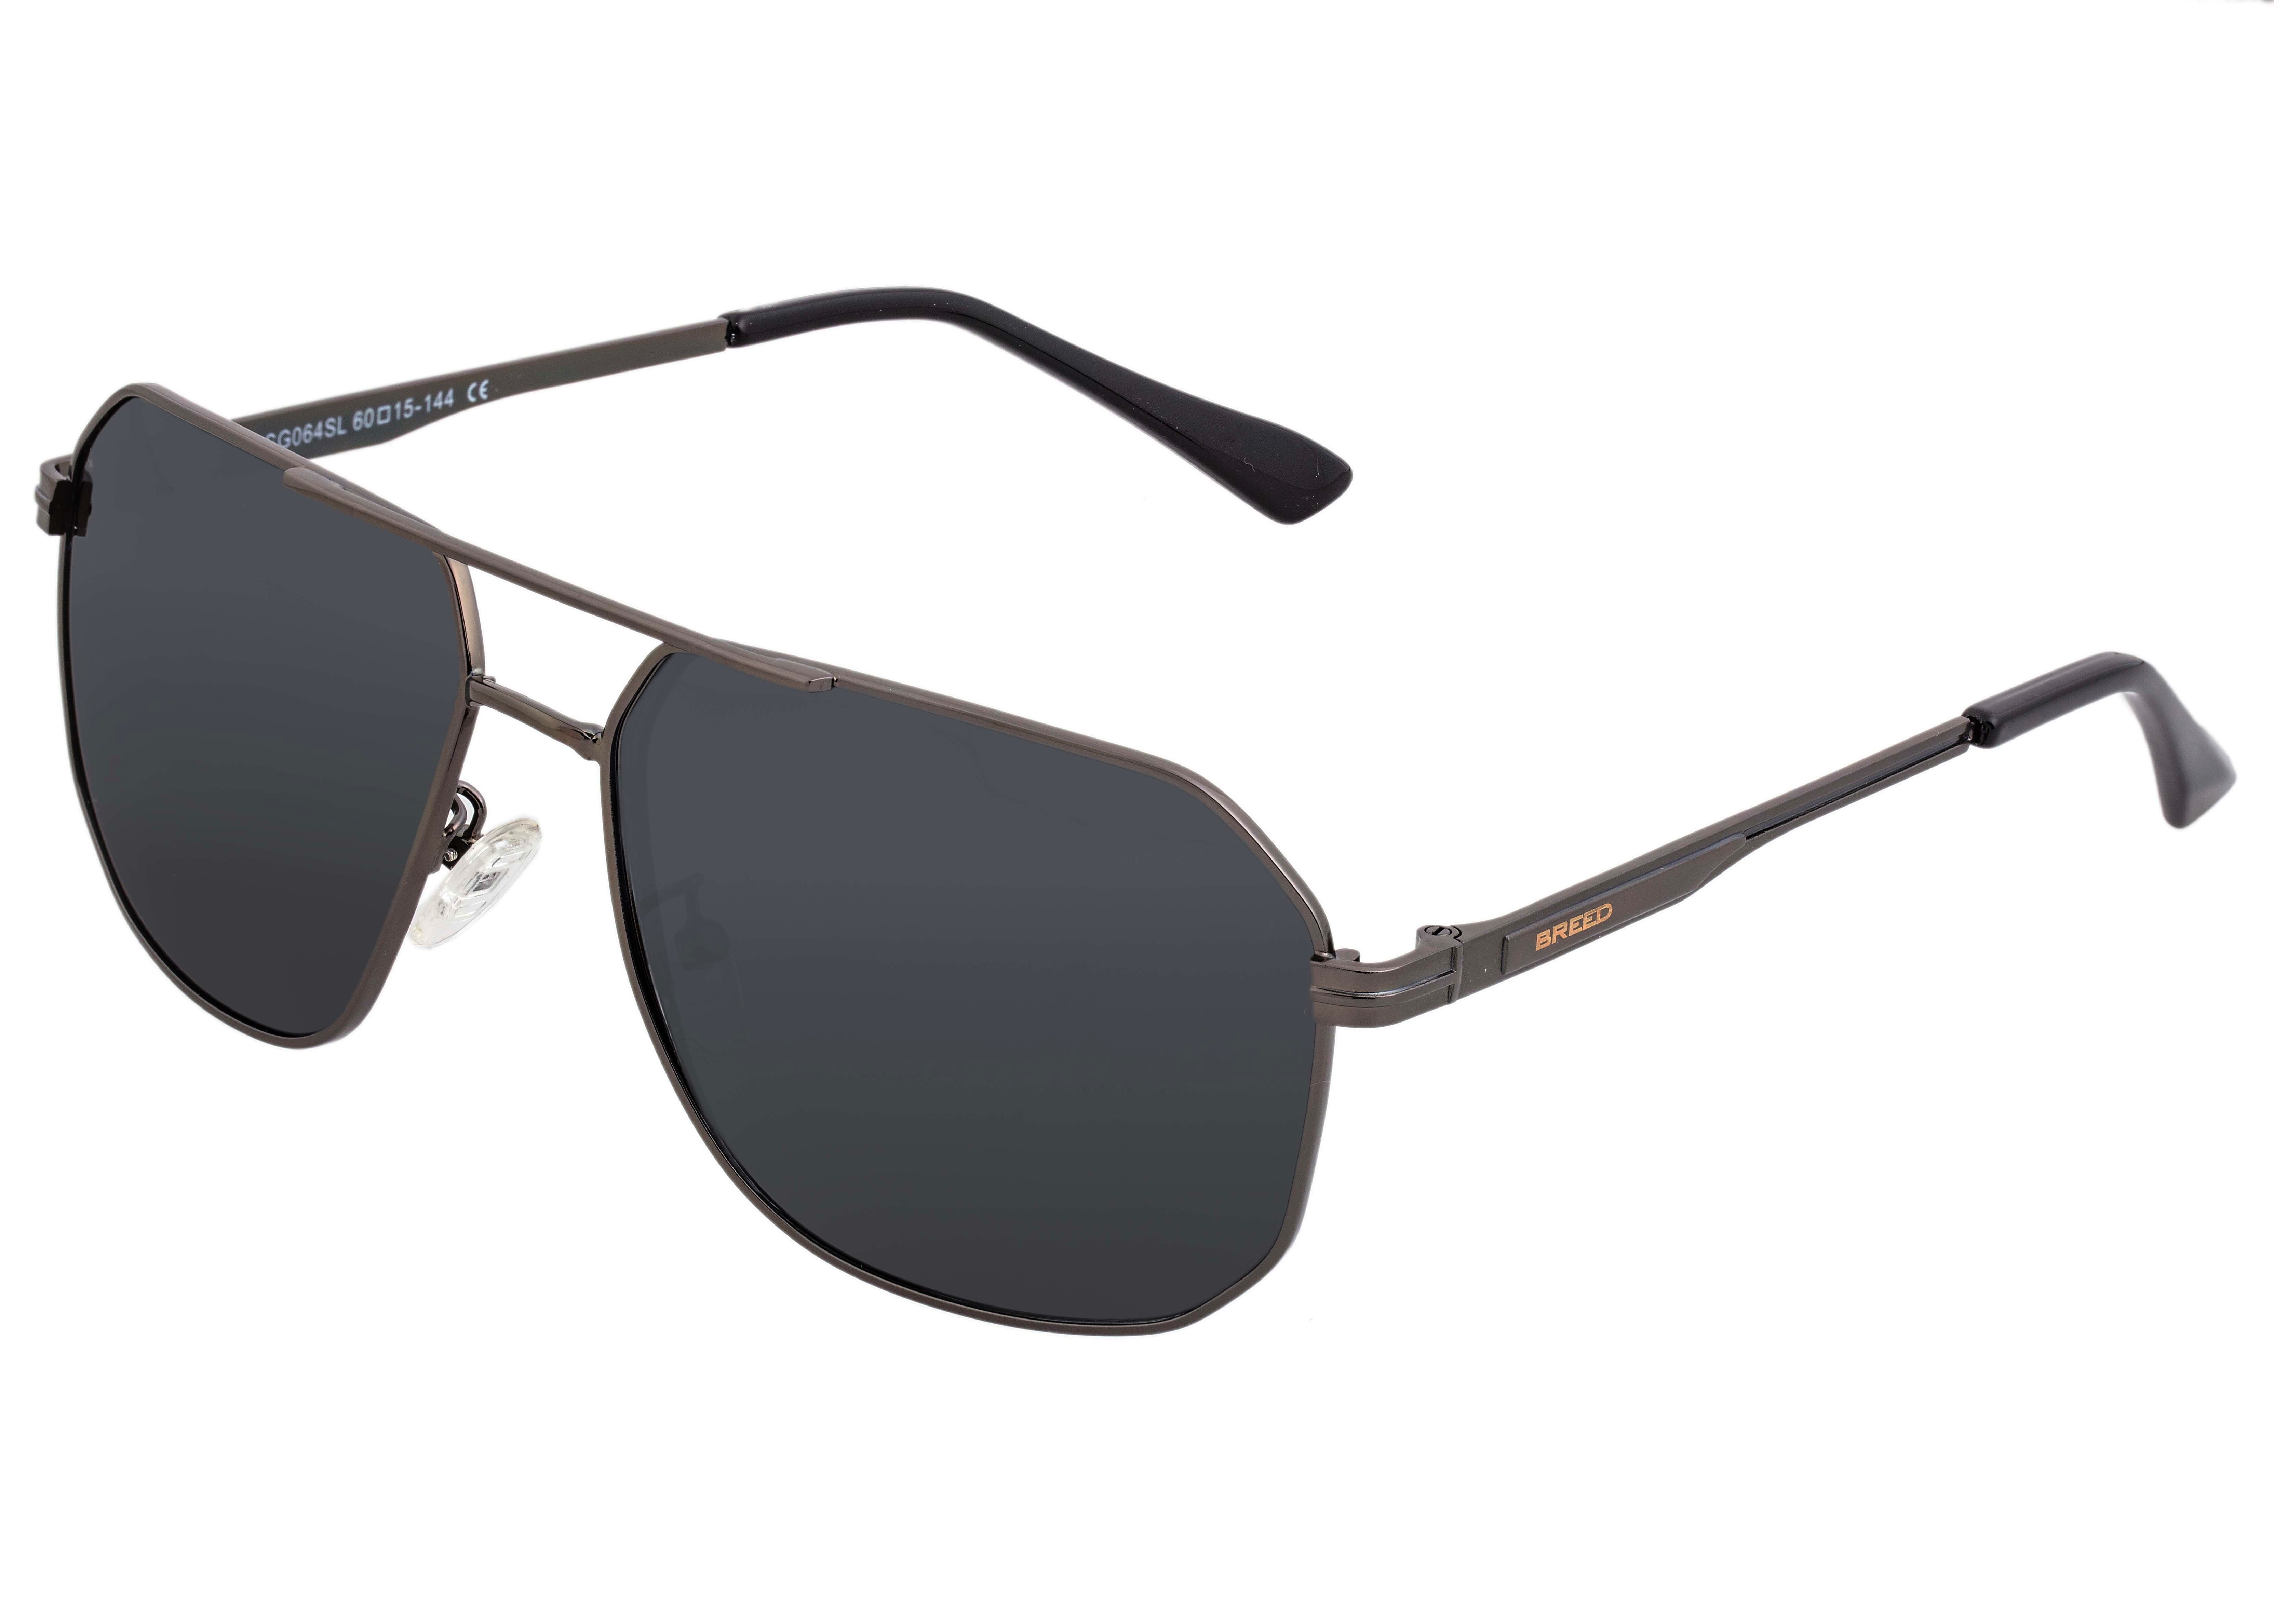 Breed Sunglasses Norma Polarized Sunglasses - Men's, Gunmetal/Black ...